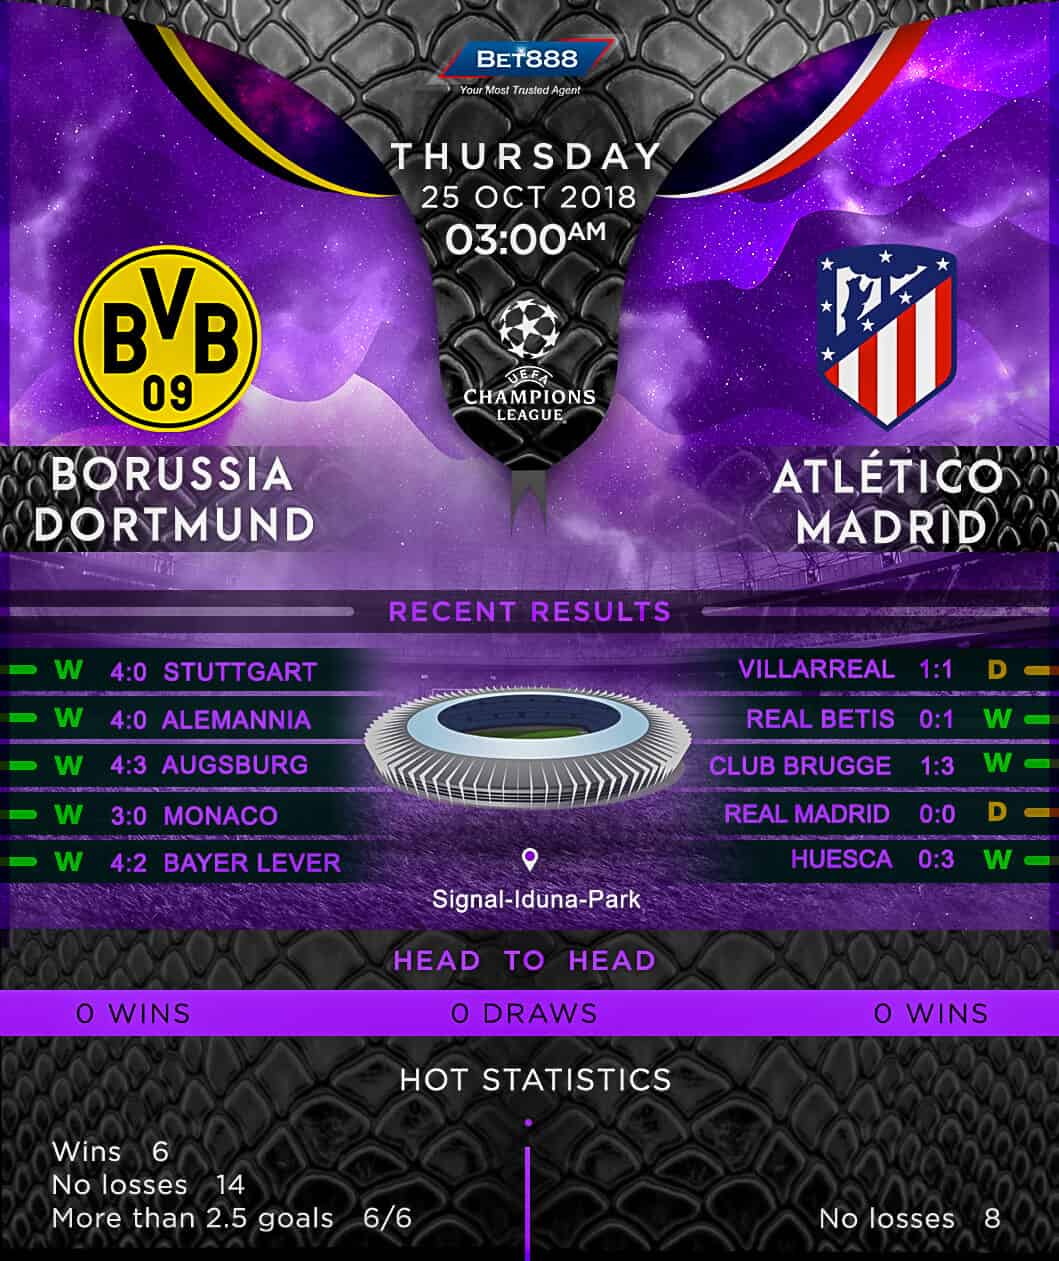 Borussia Dortmund vs Atletico Madrid 25/10/18